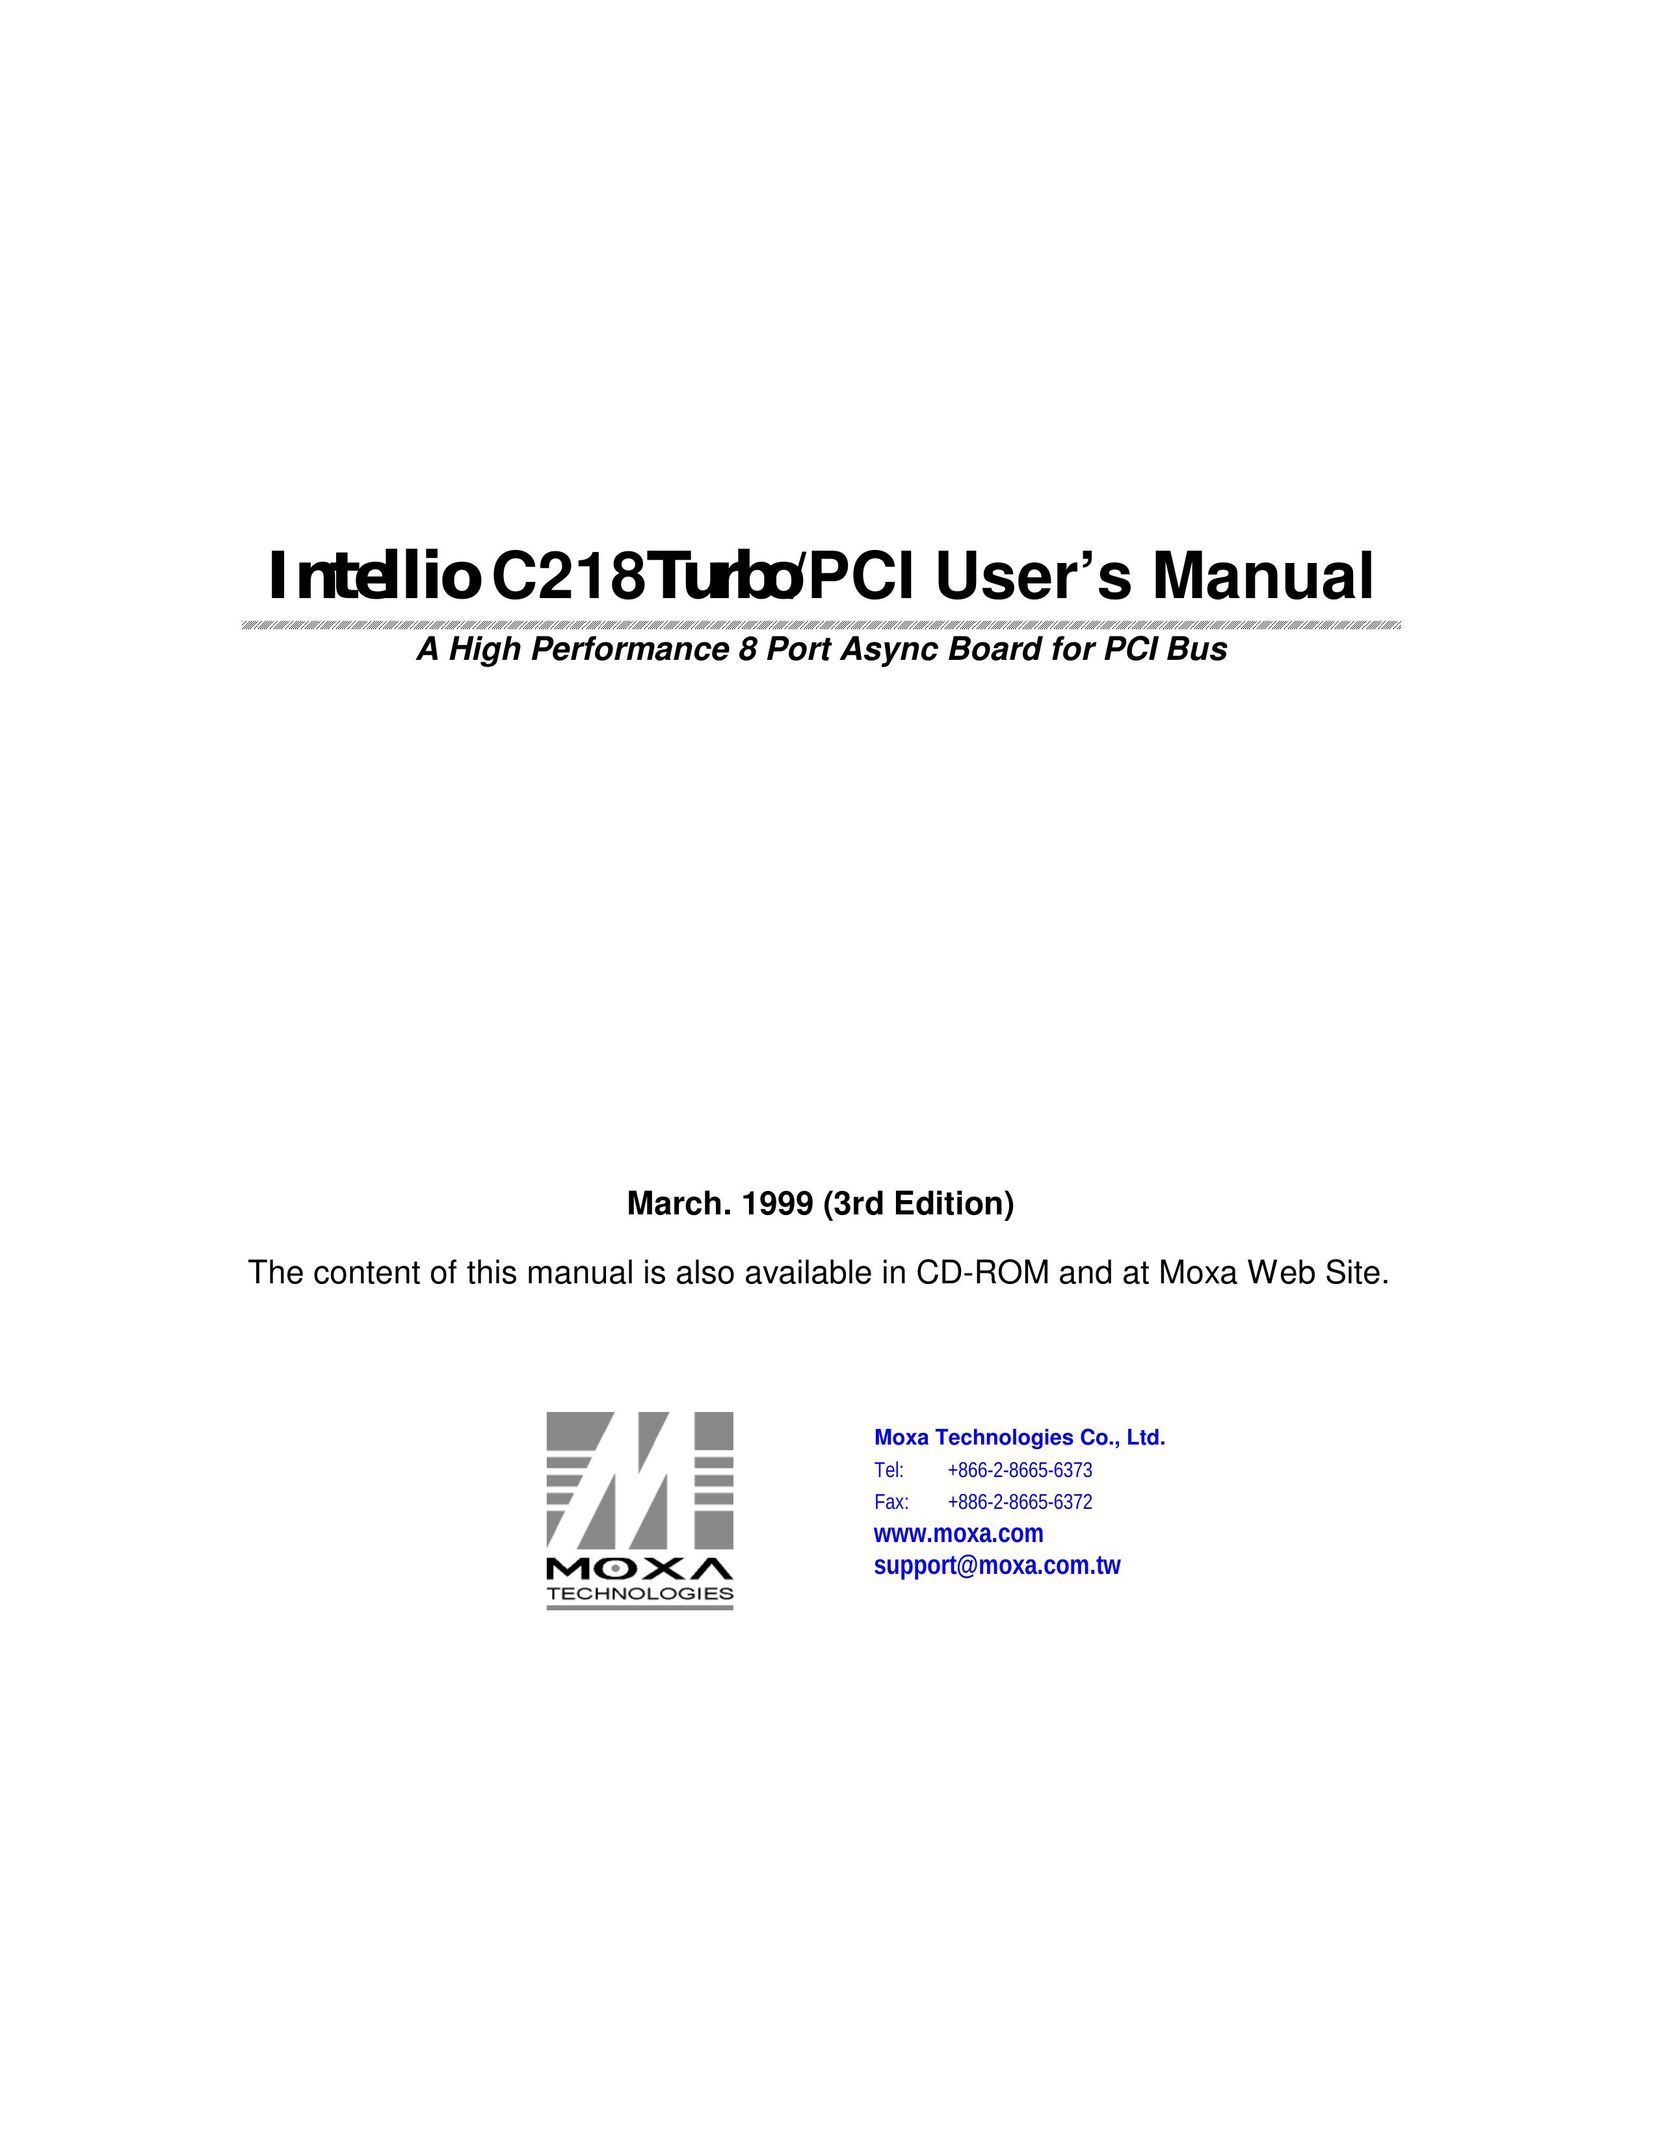 Moxa Technologies C218 Computer Hardware User Manual